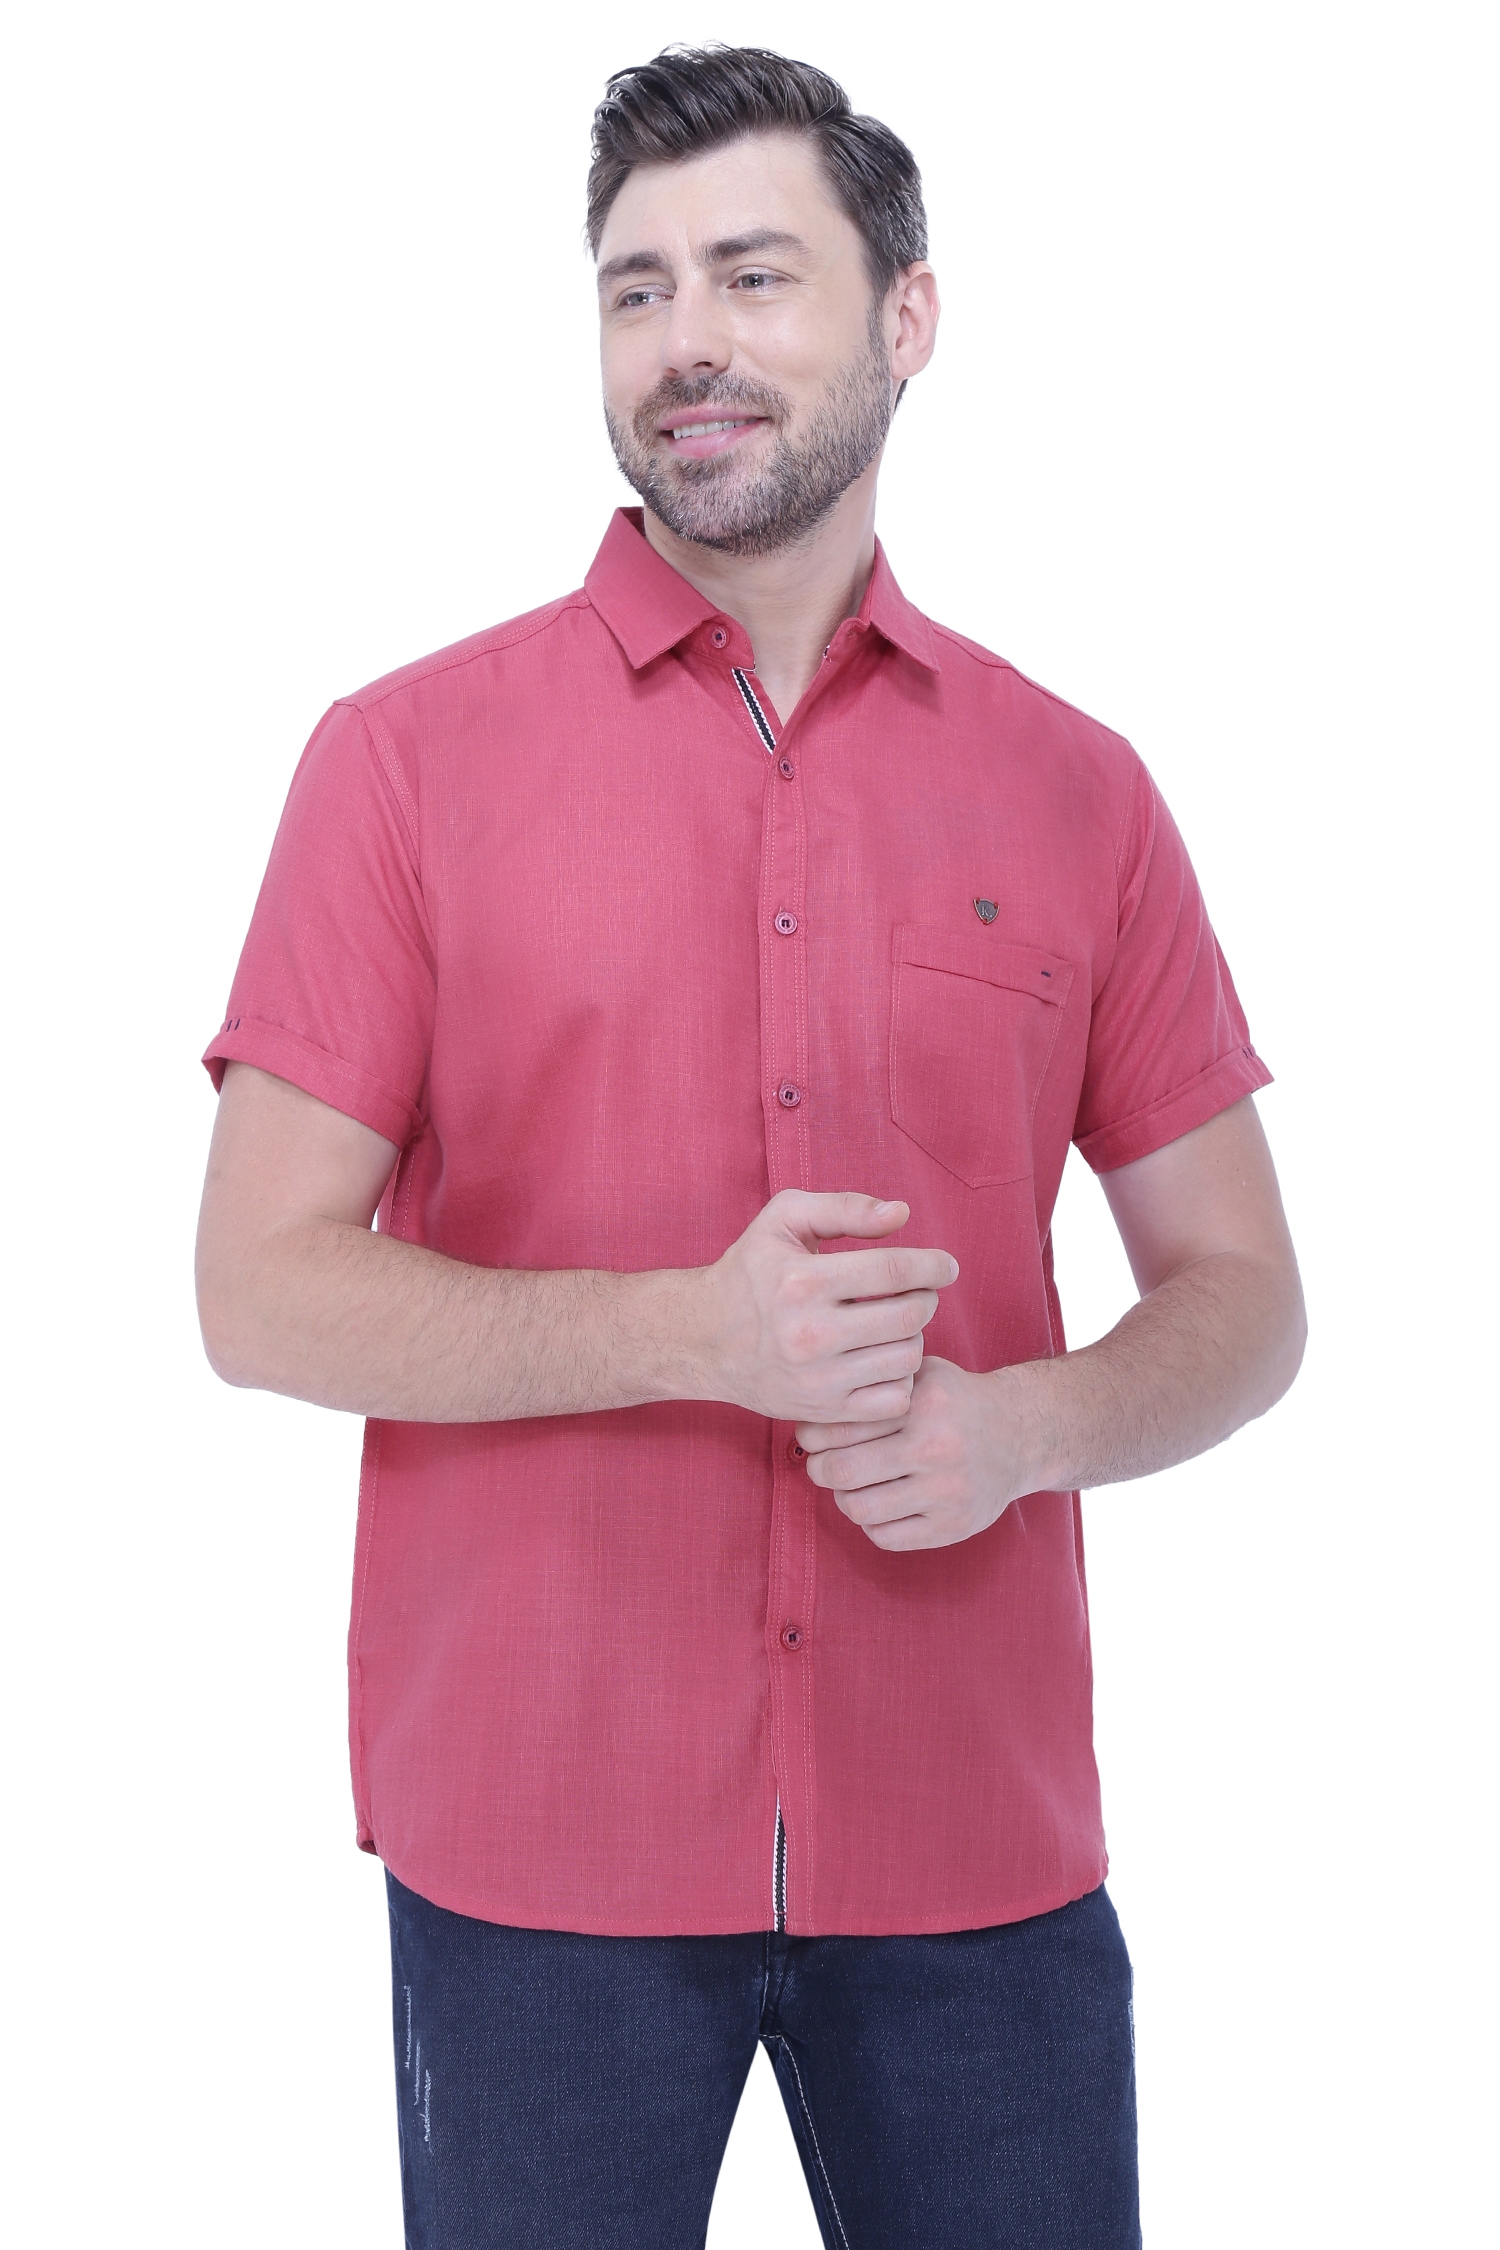 Kuons Avenue | Kuons Avenue Men's Linen Blend Half Sleeves Casual Shirt-KACLHS1235